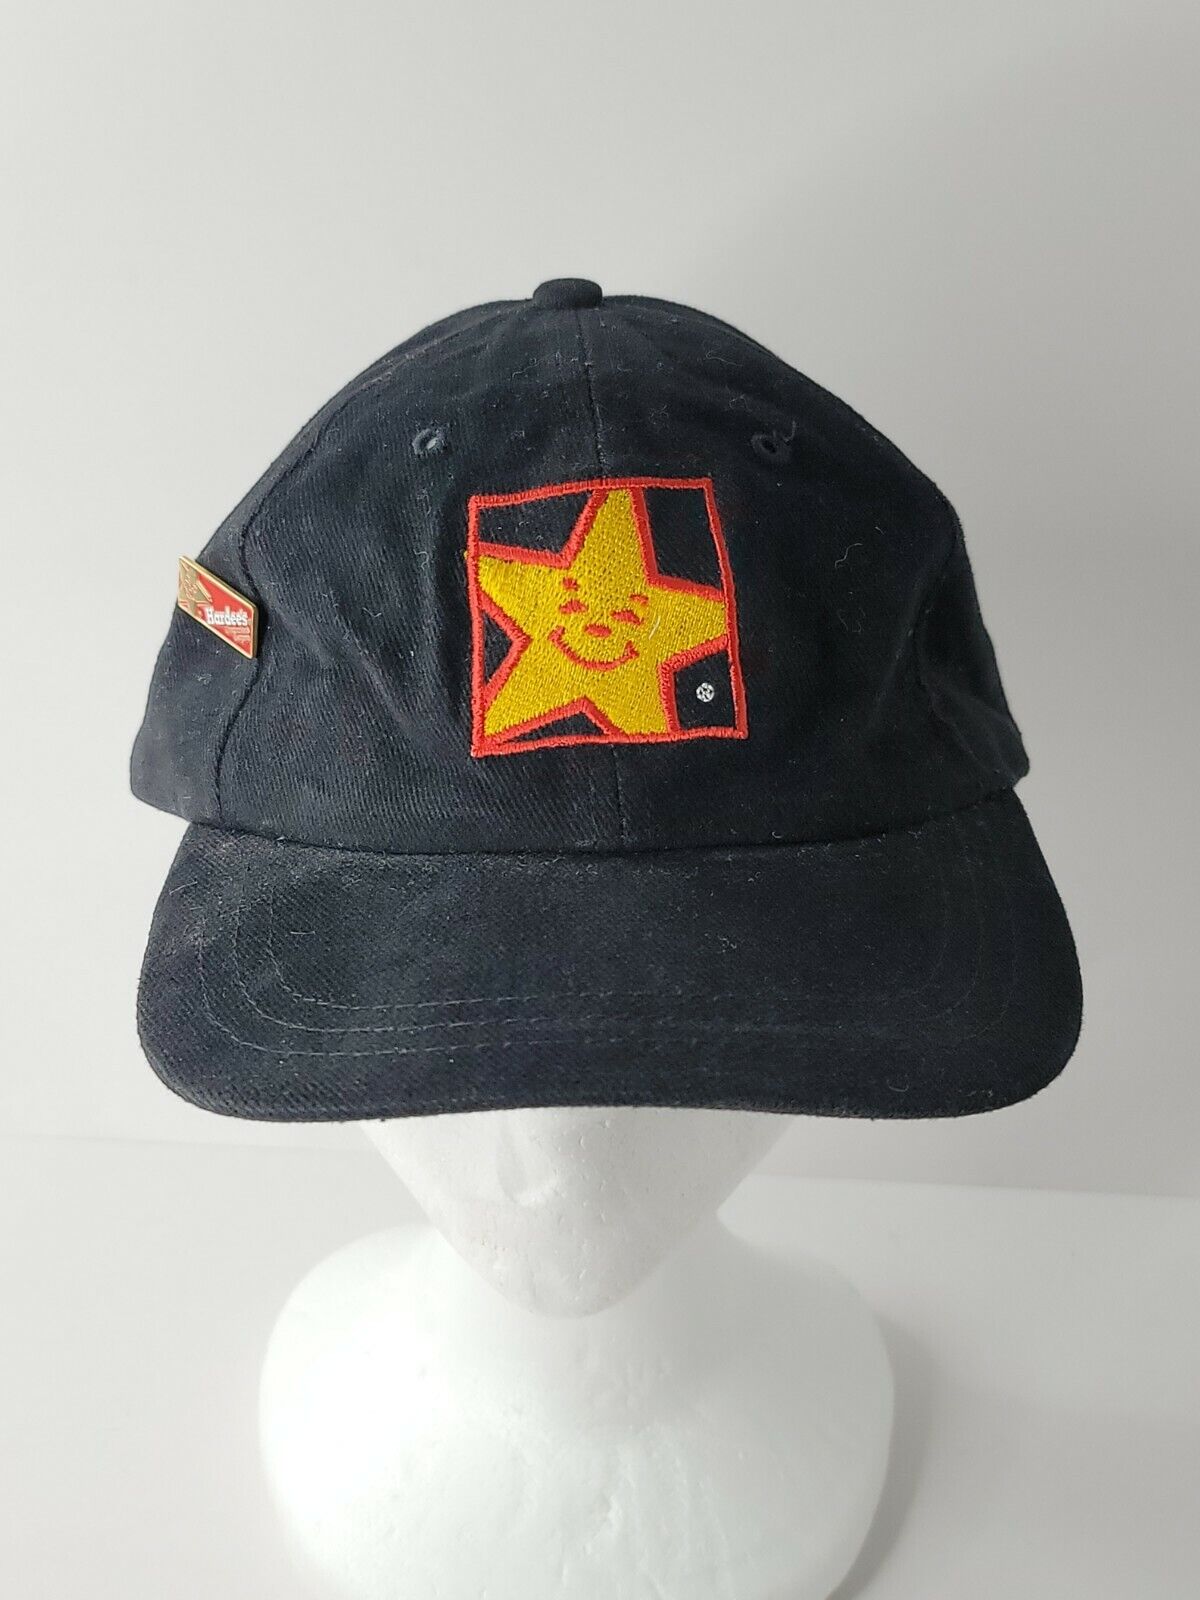 Black CARL'S Jr. Hardee’s Hamburgers Embroidered Logo Adjustable Baseball Hat